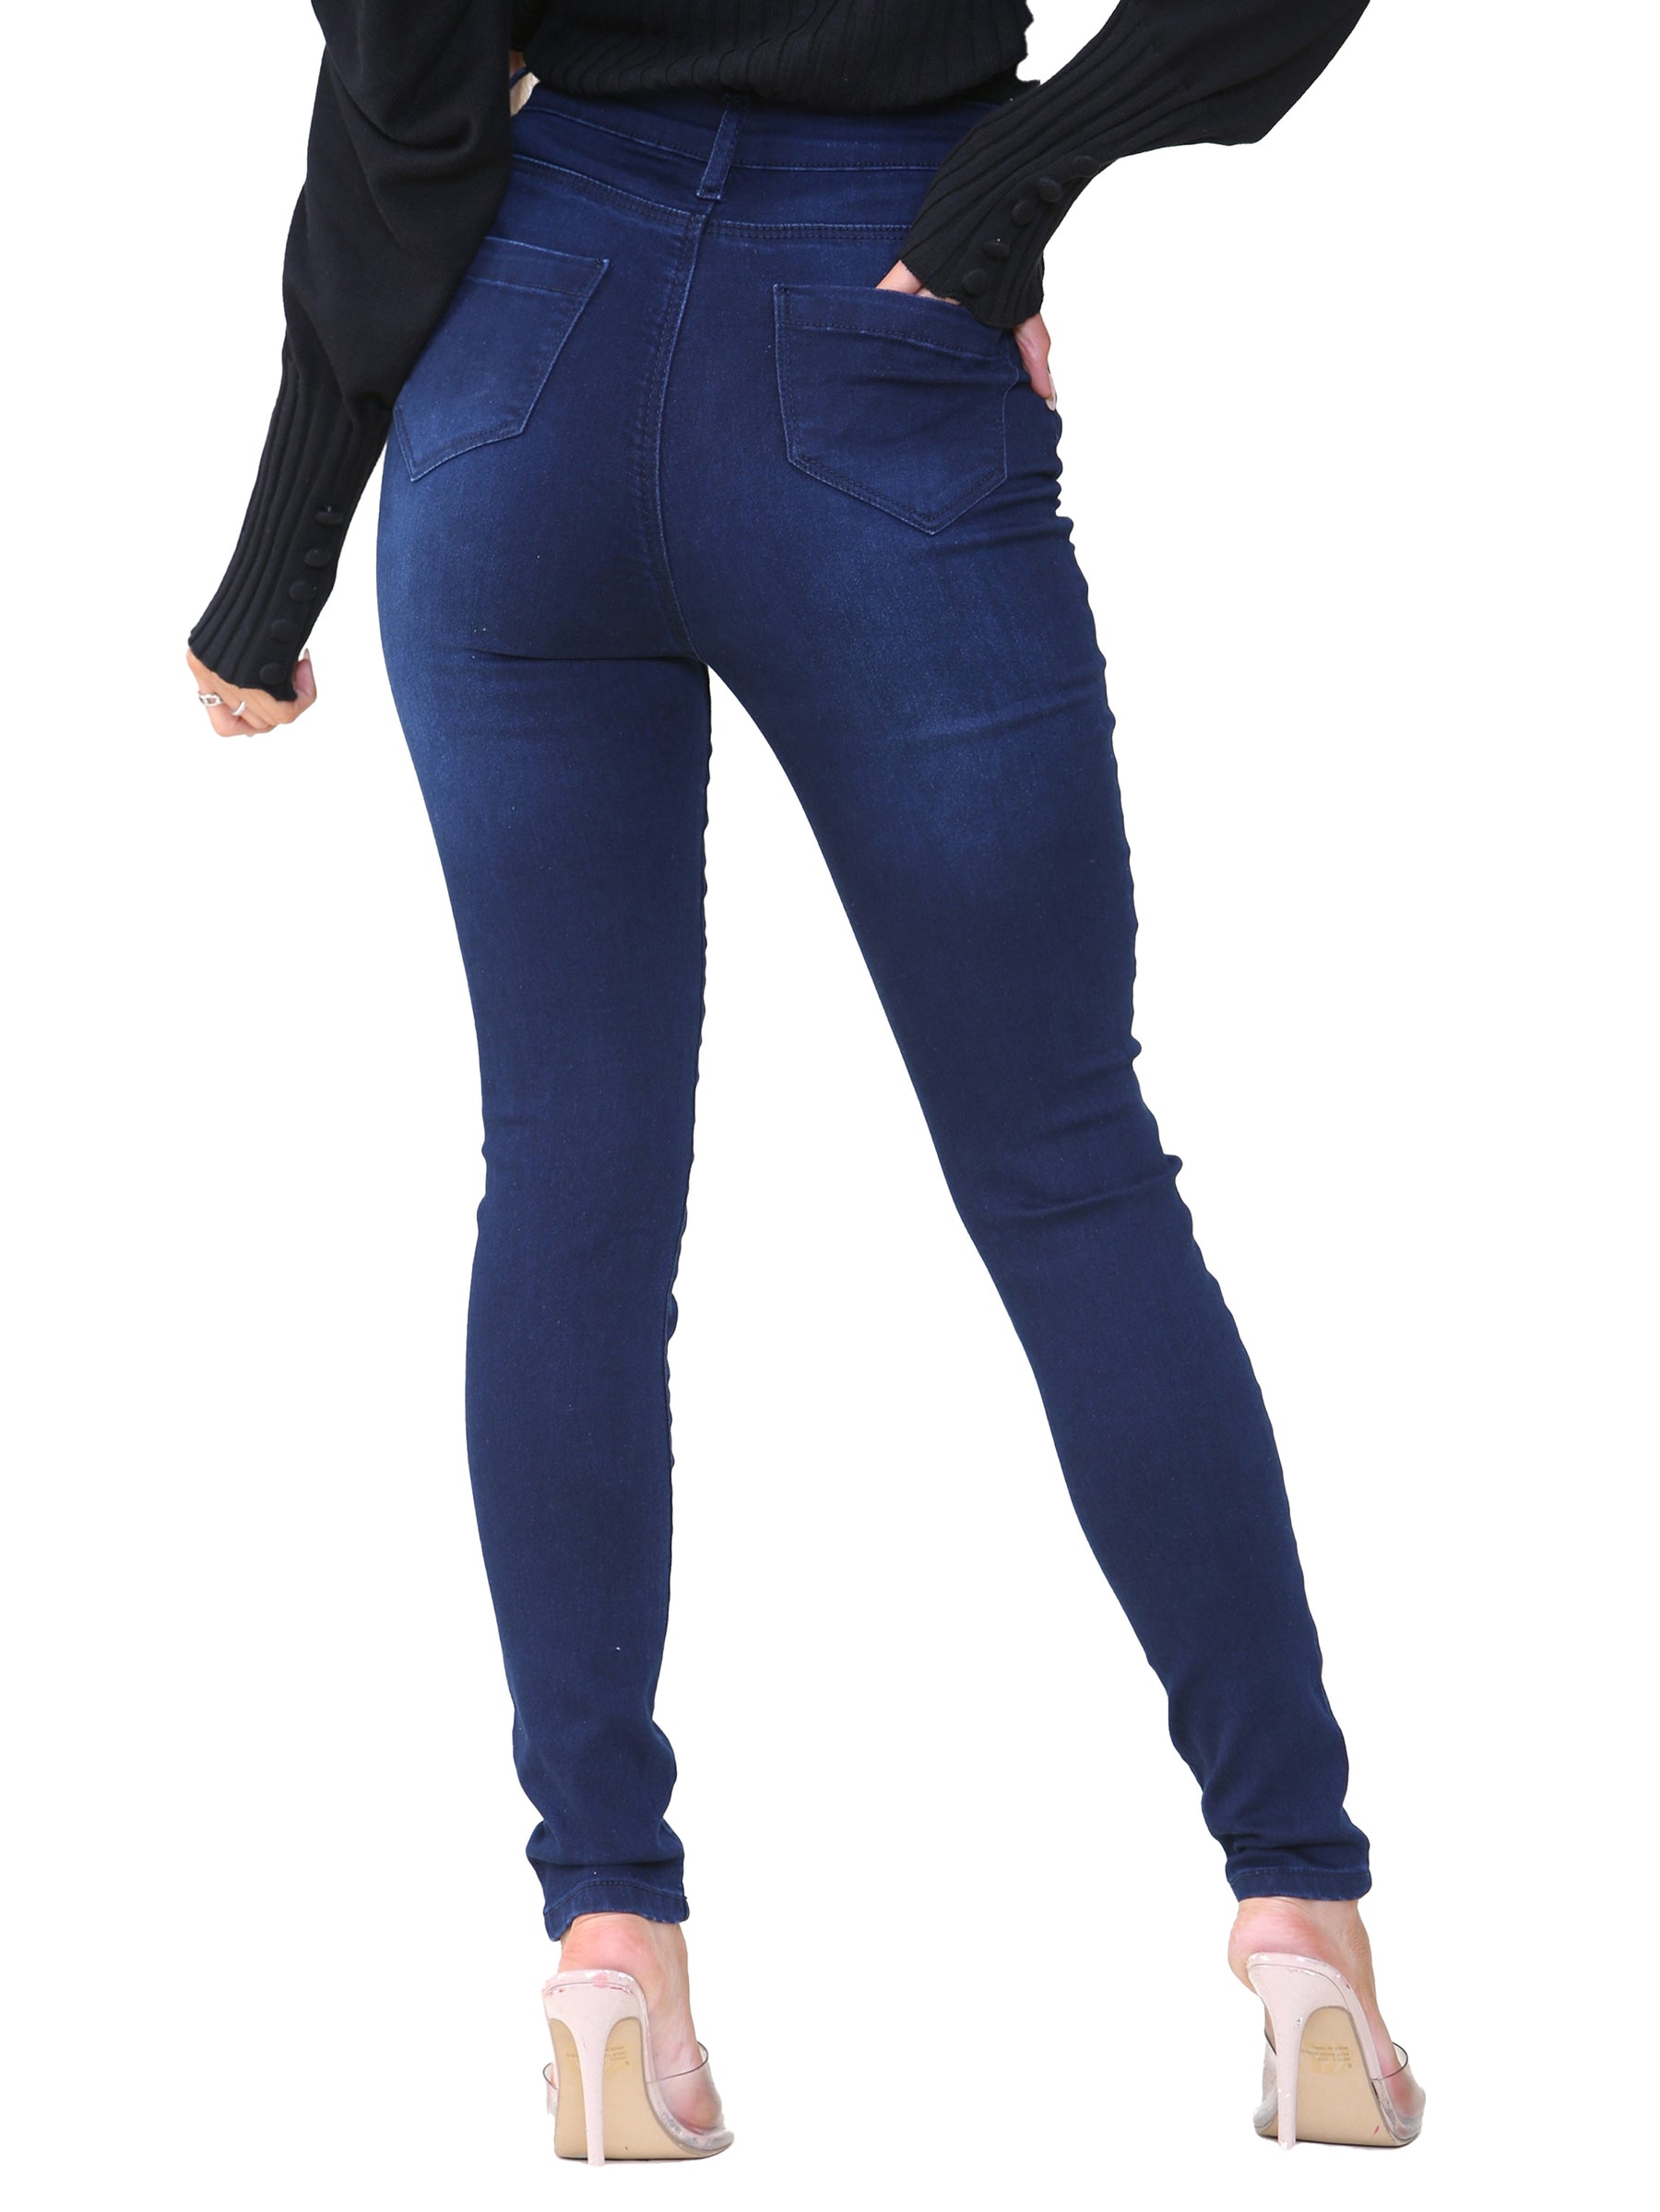 Enzo Womens Skinny Stretch Jeans Ladies New Denim Slim Fit Pants